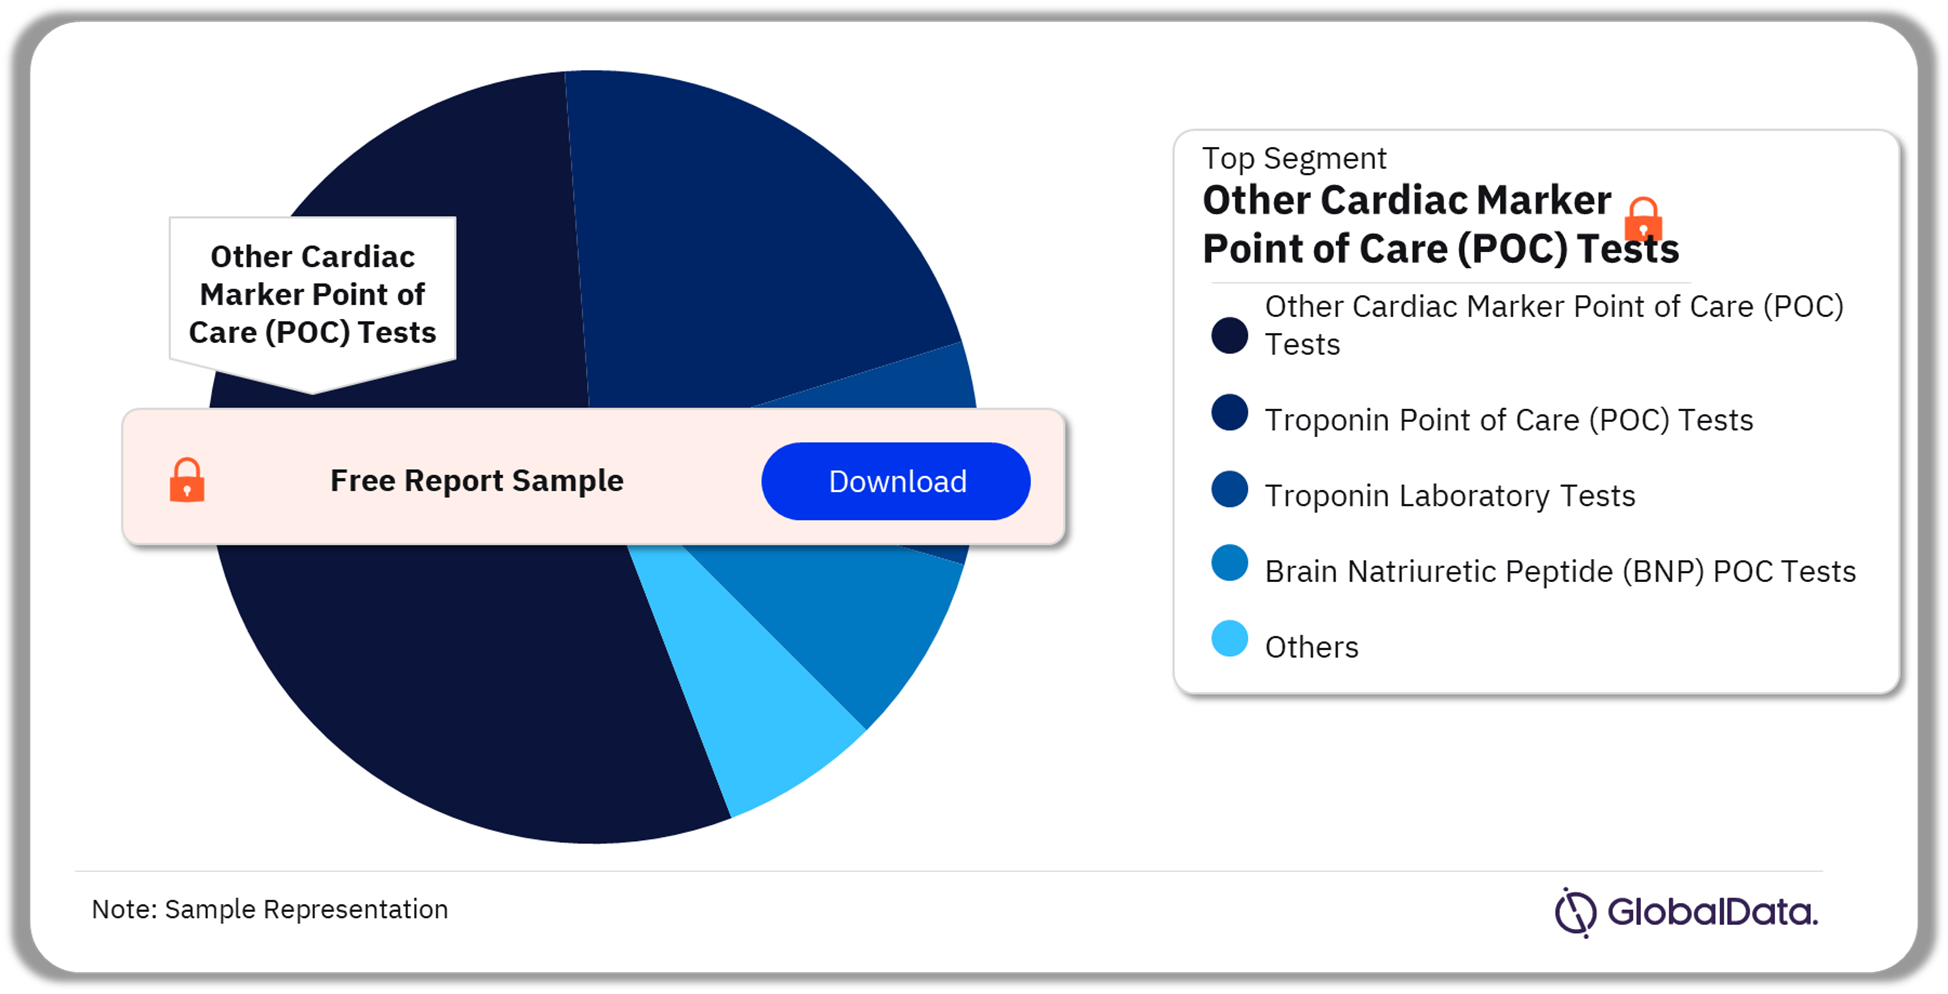 Cardiac Marker Tests Pipeline Market Analysis by Segments, 2023 (%)